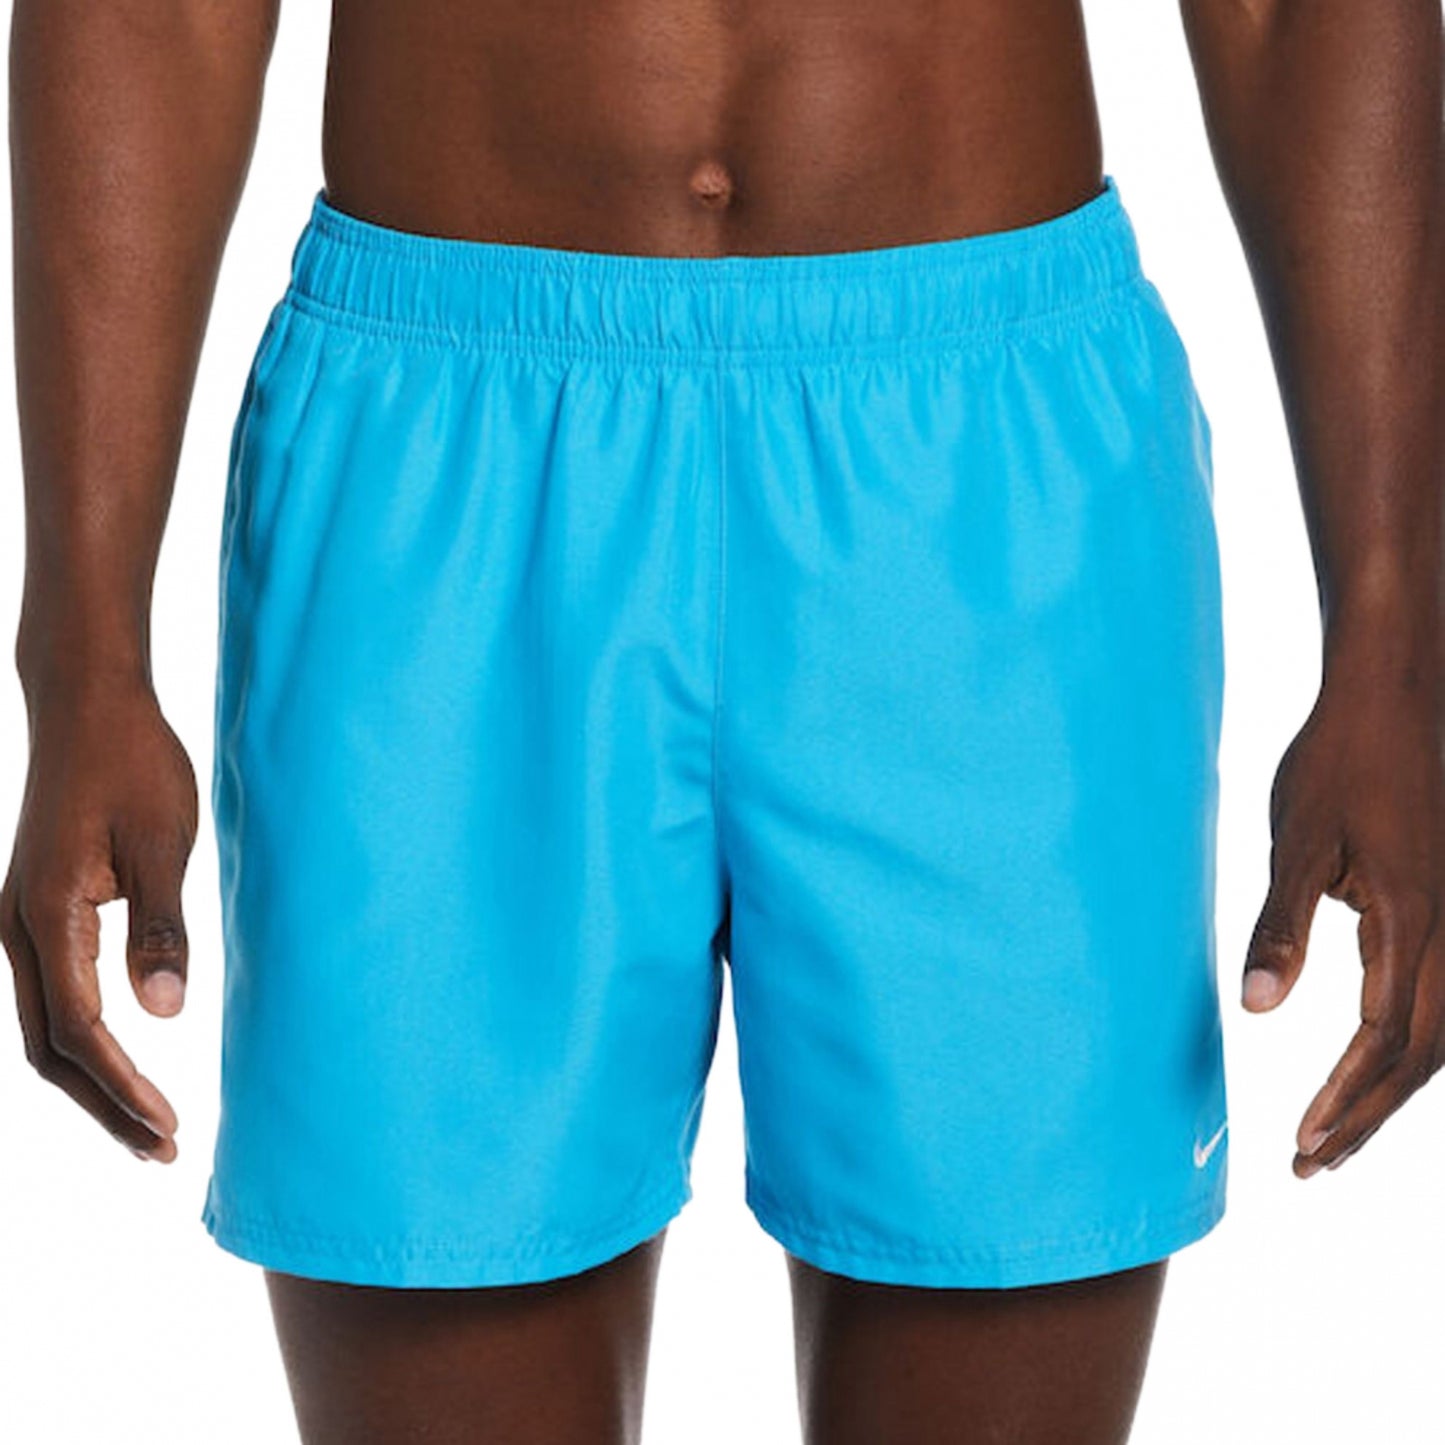 Costume Pantaloncino Nike Essentials Beach Shorts